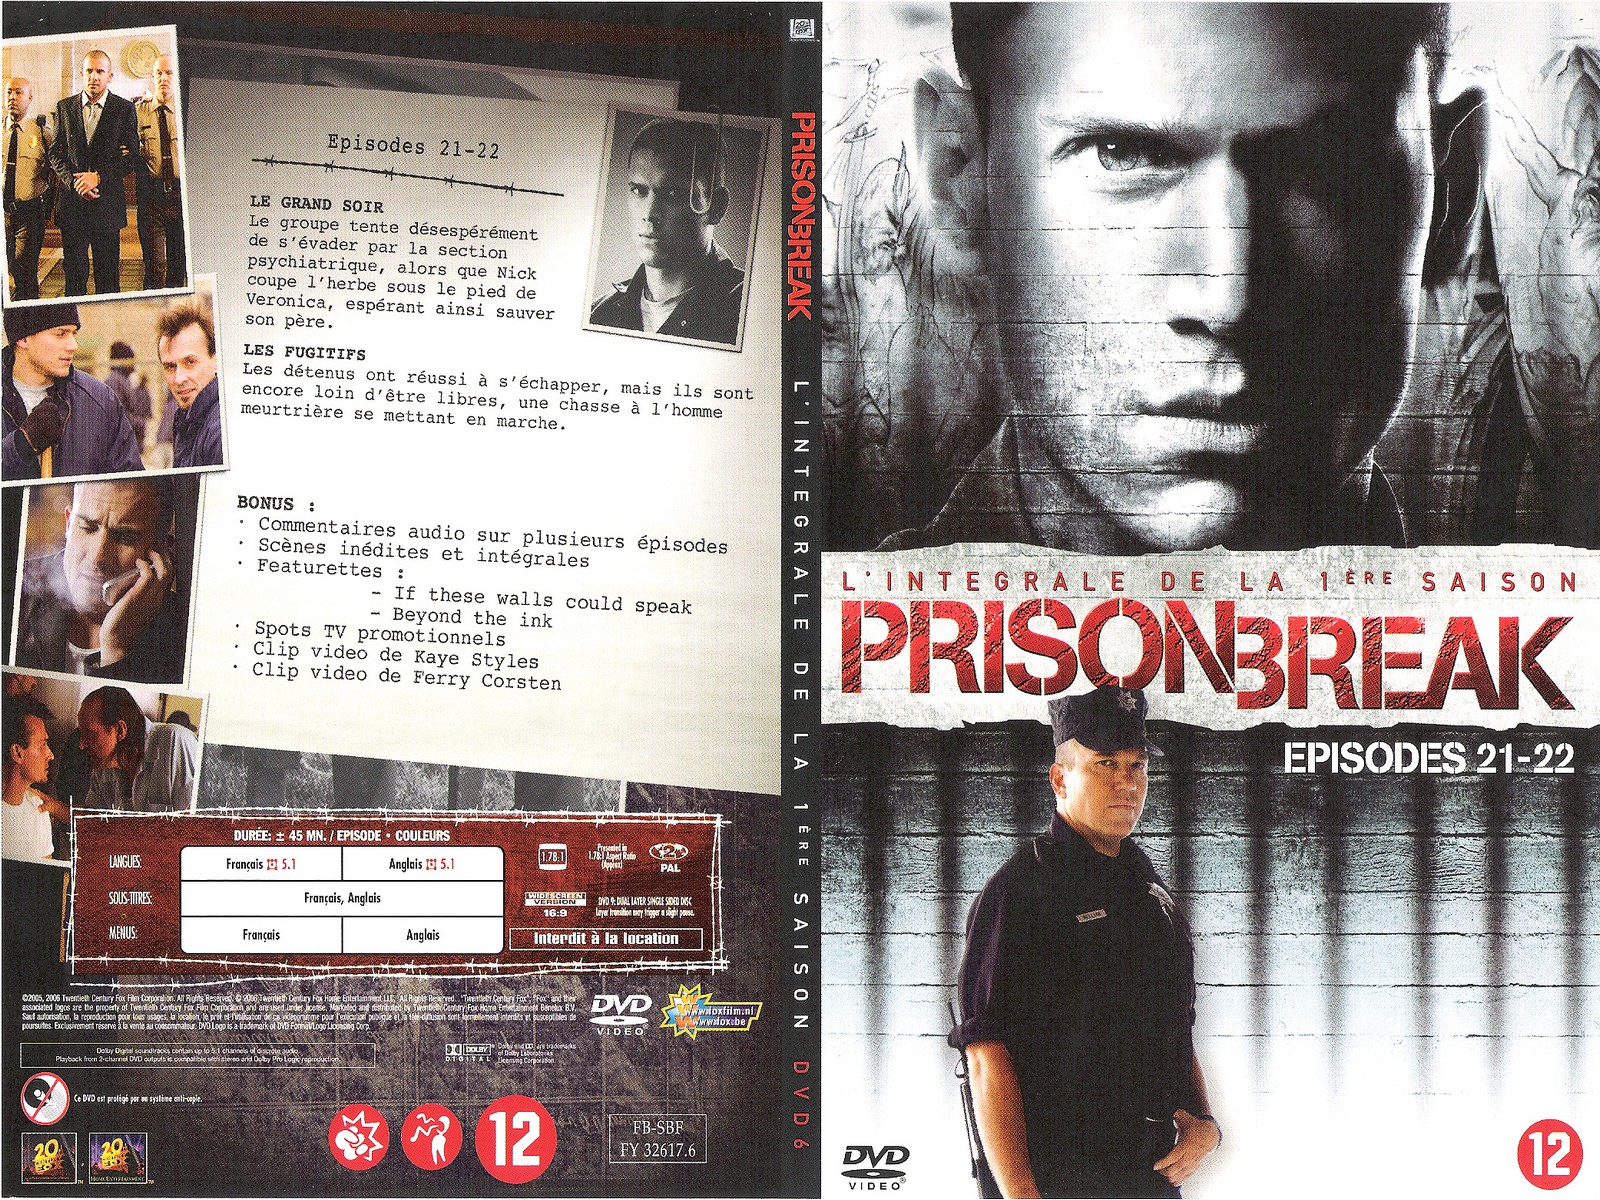 Jaquette DVD Prison break saison 1 dvd 6 - SLIM